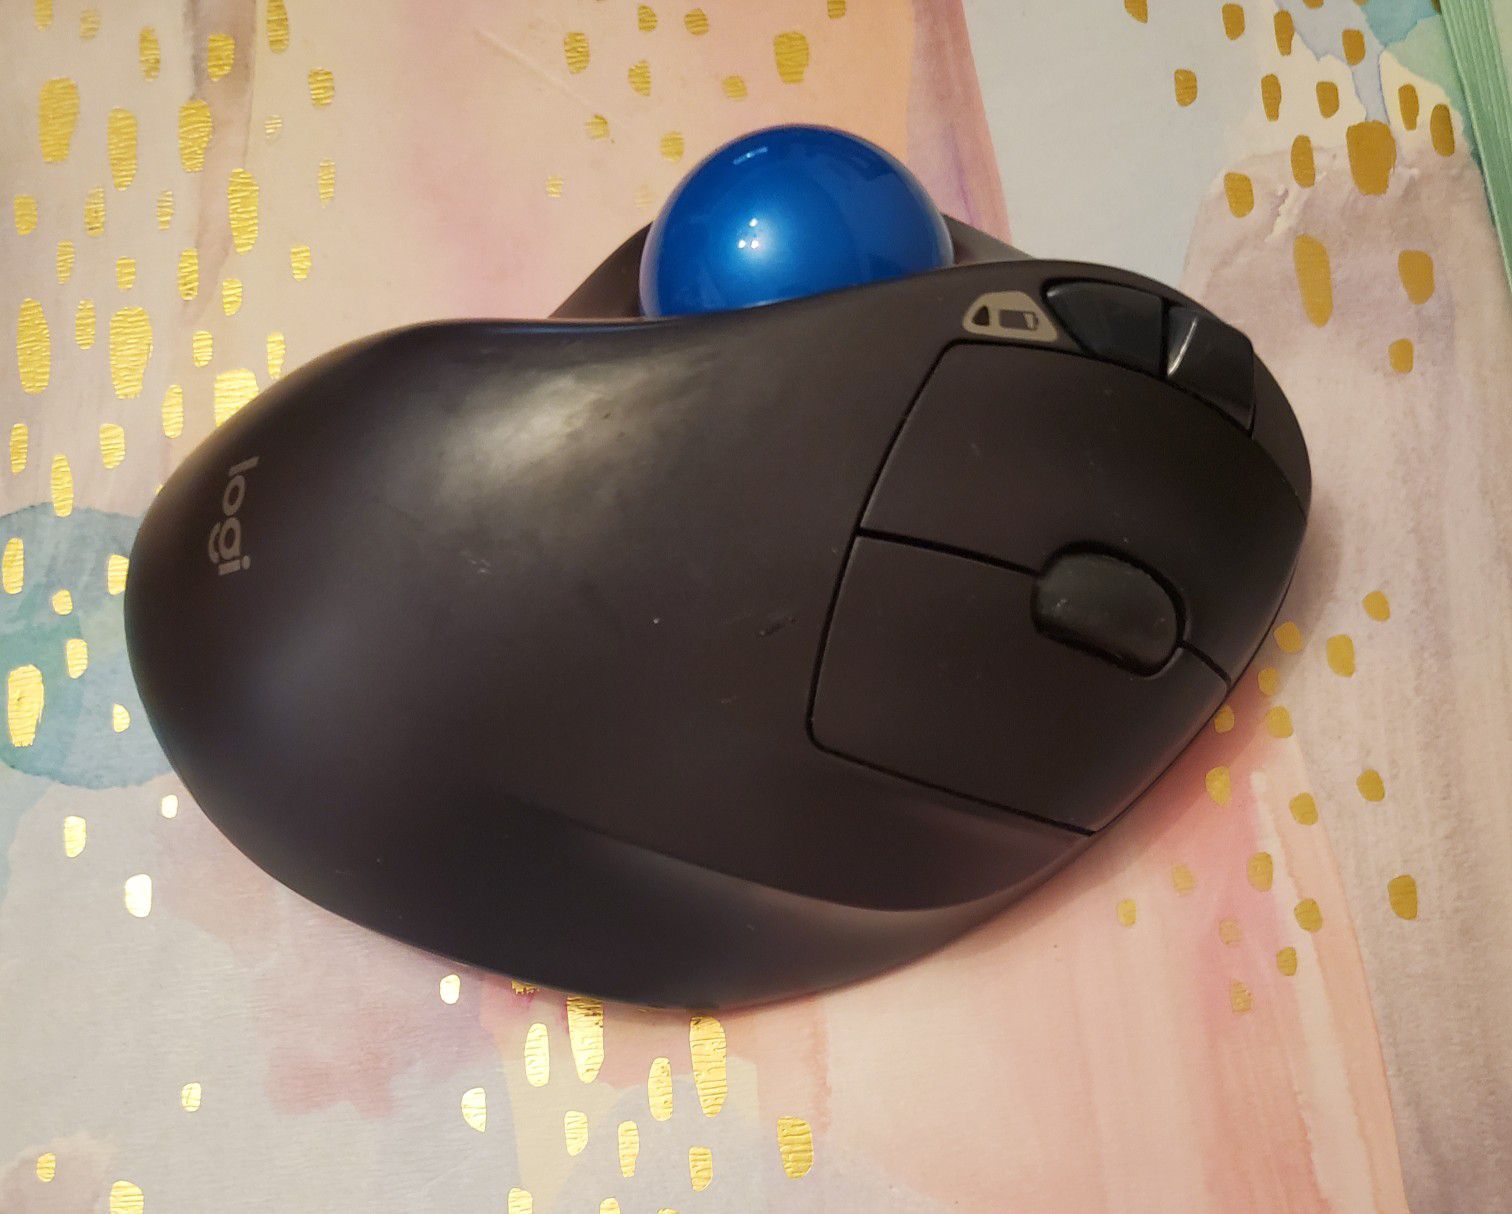 Logitech Logitech - M570 Wireless Trackball Mouse - Gray/Blue